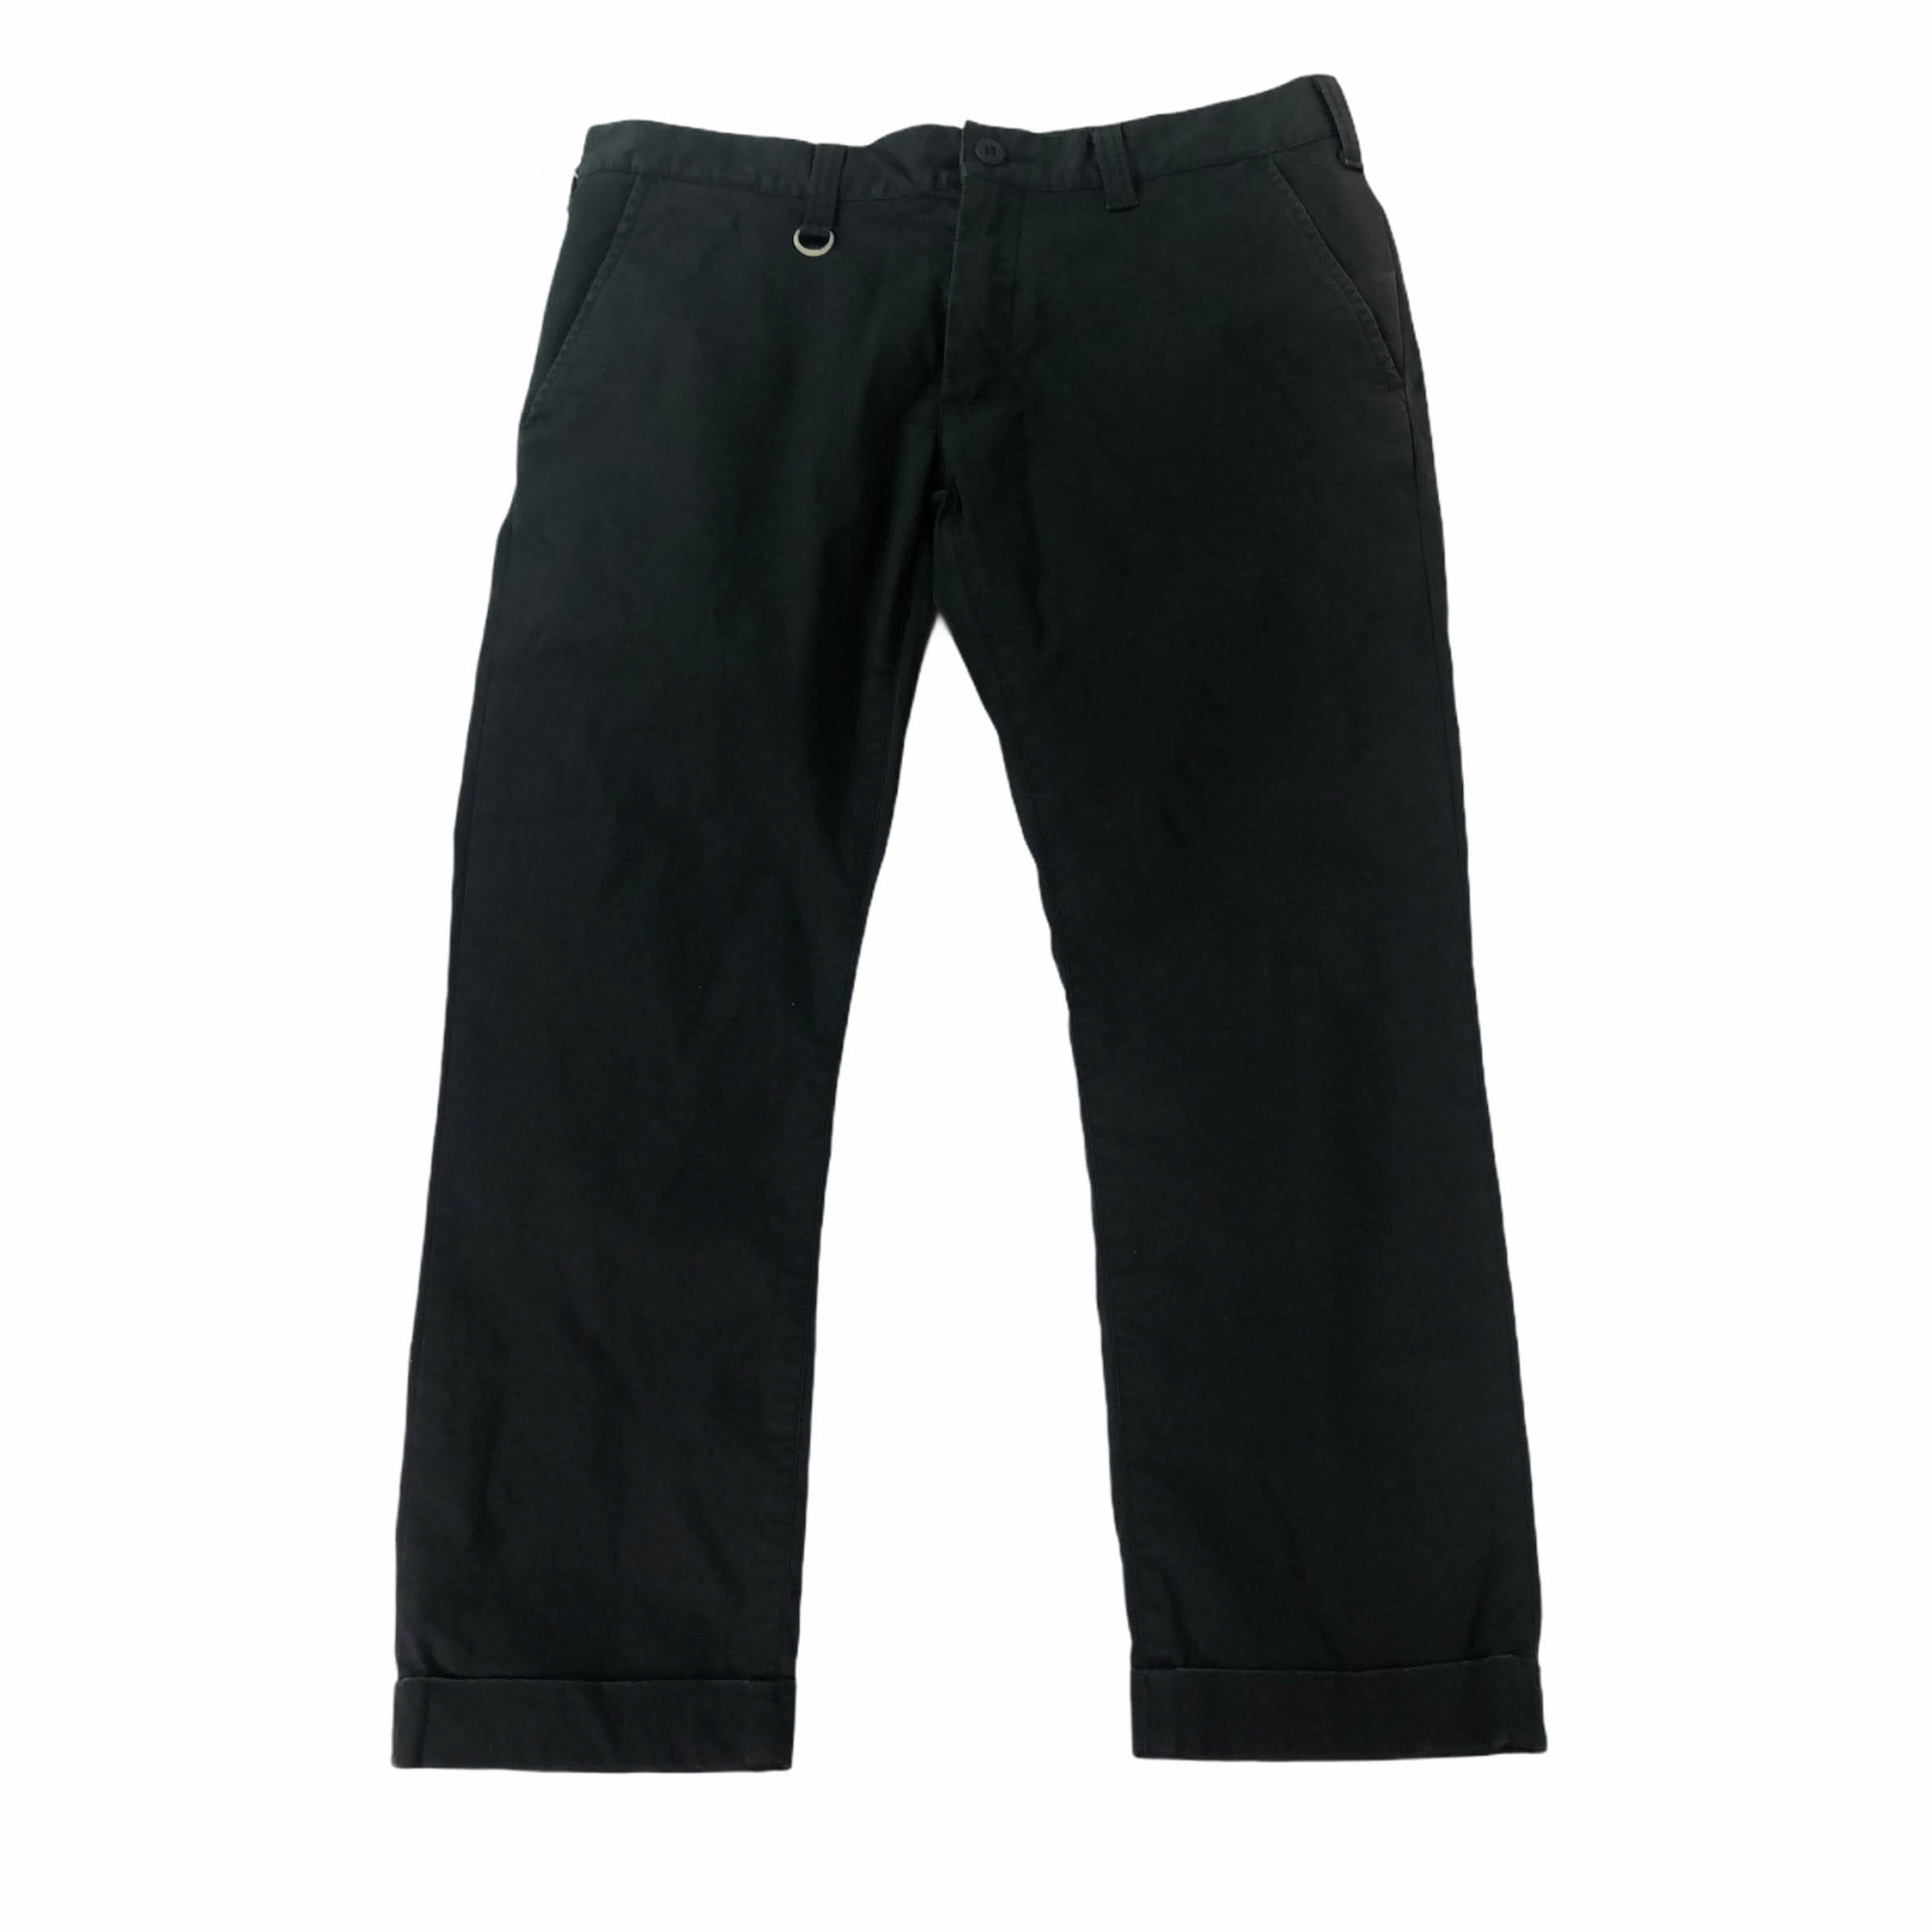 [Sophnet] Black Buckle Jeans - Size M